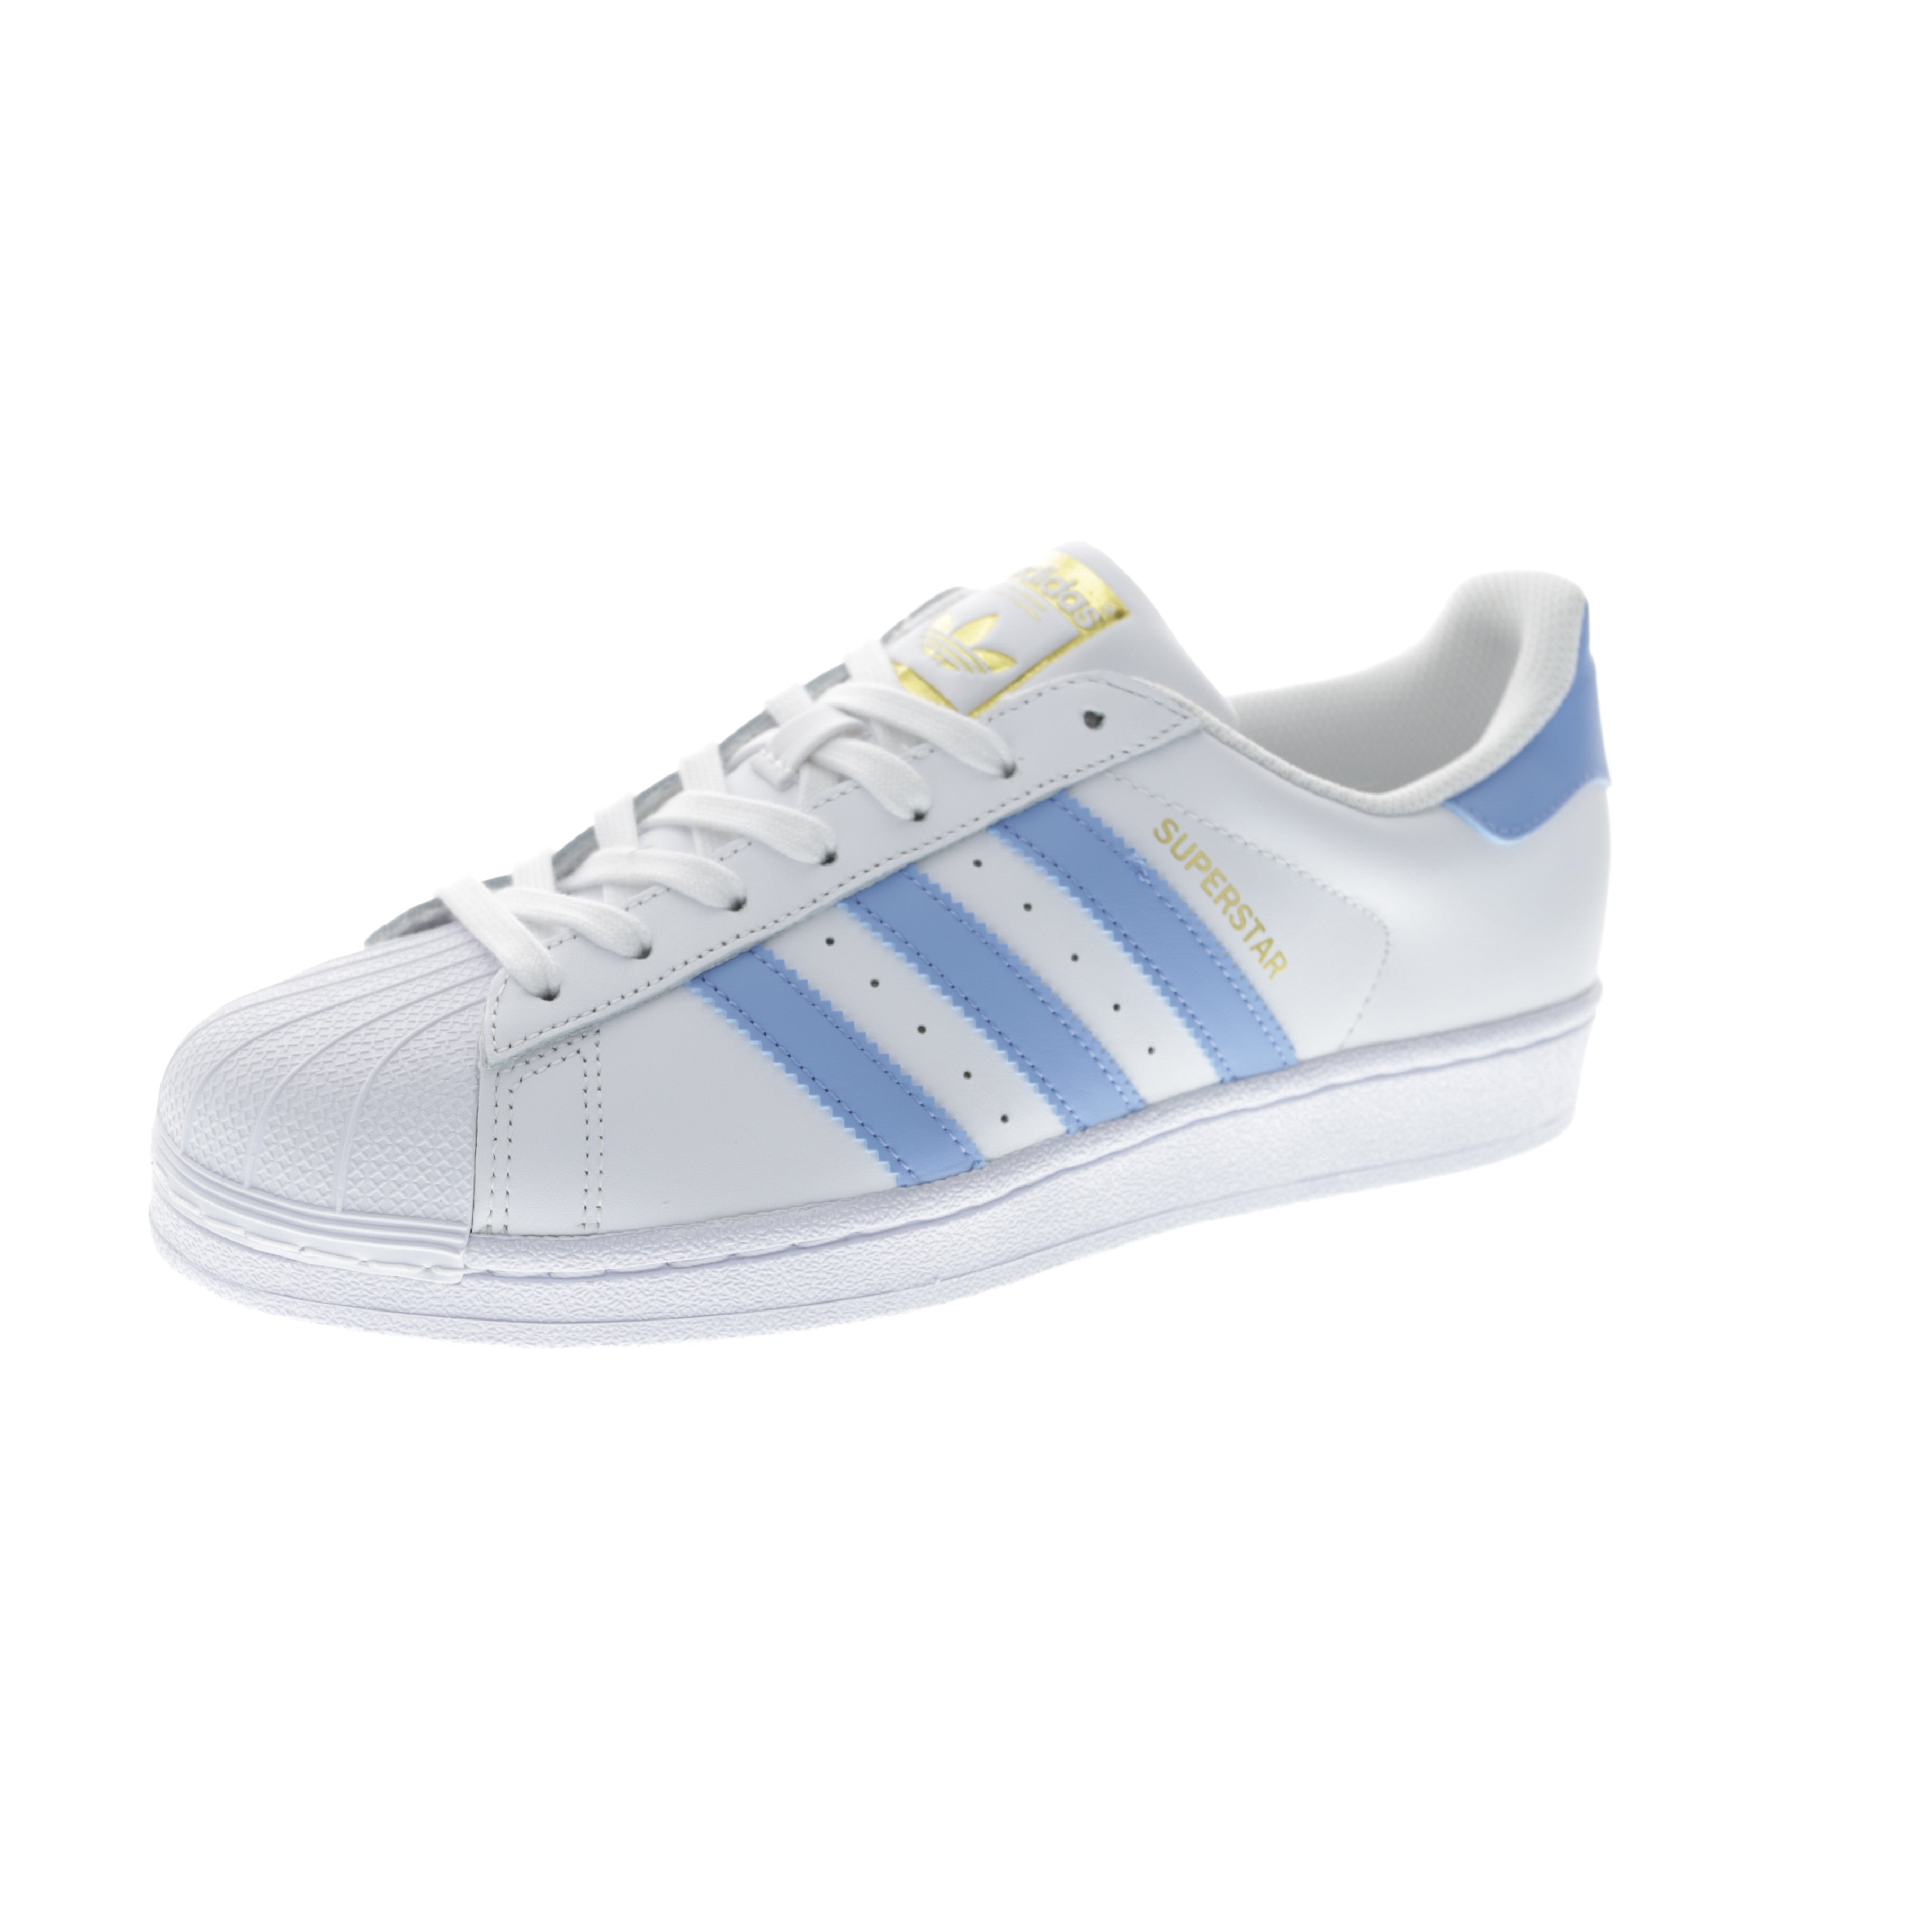 white and light blue adidas